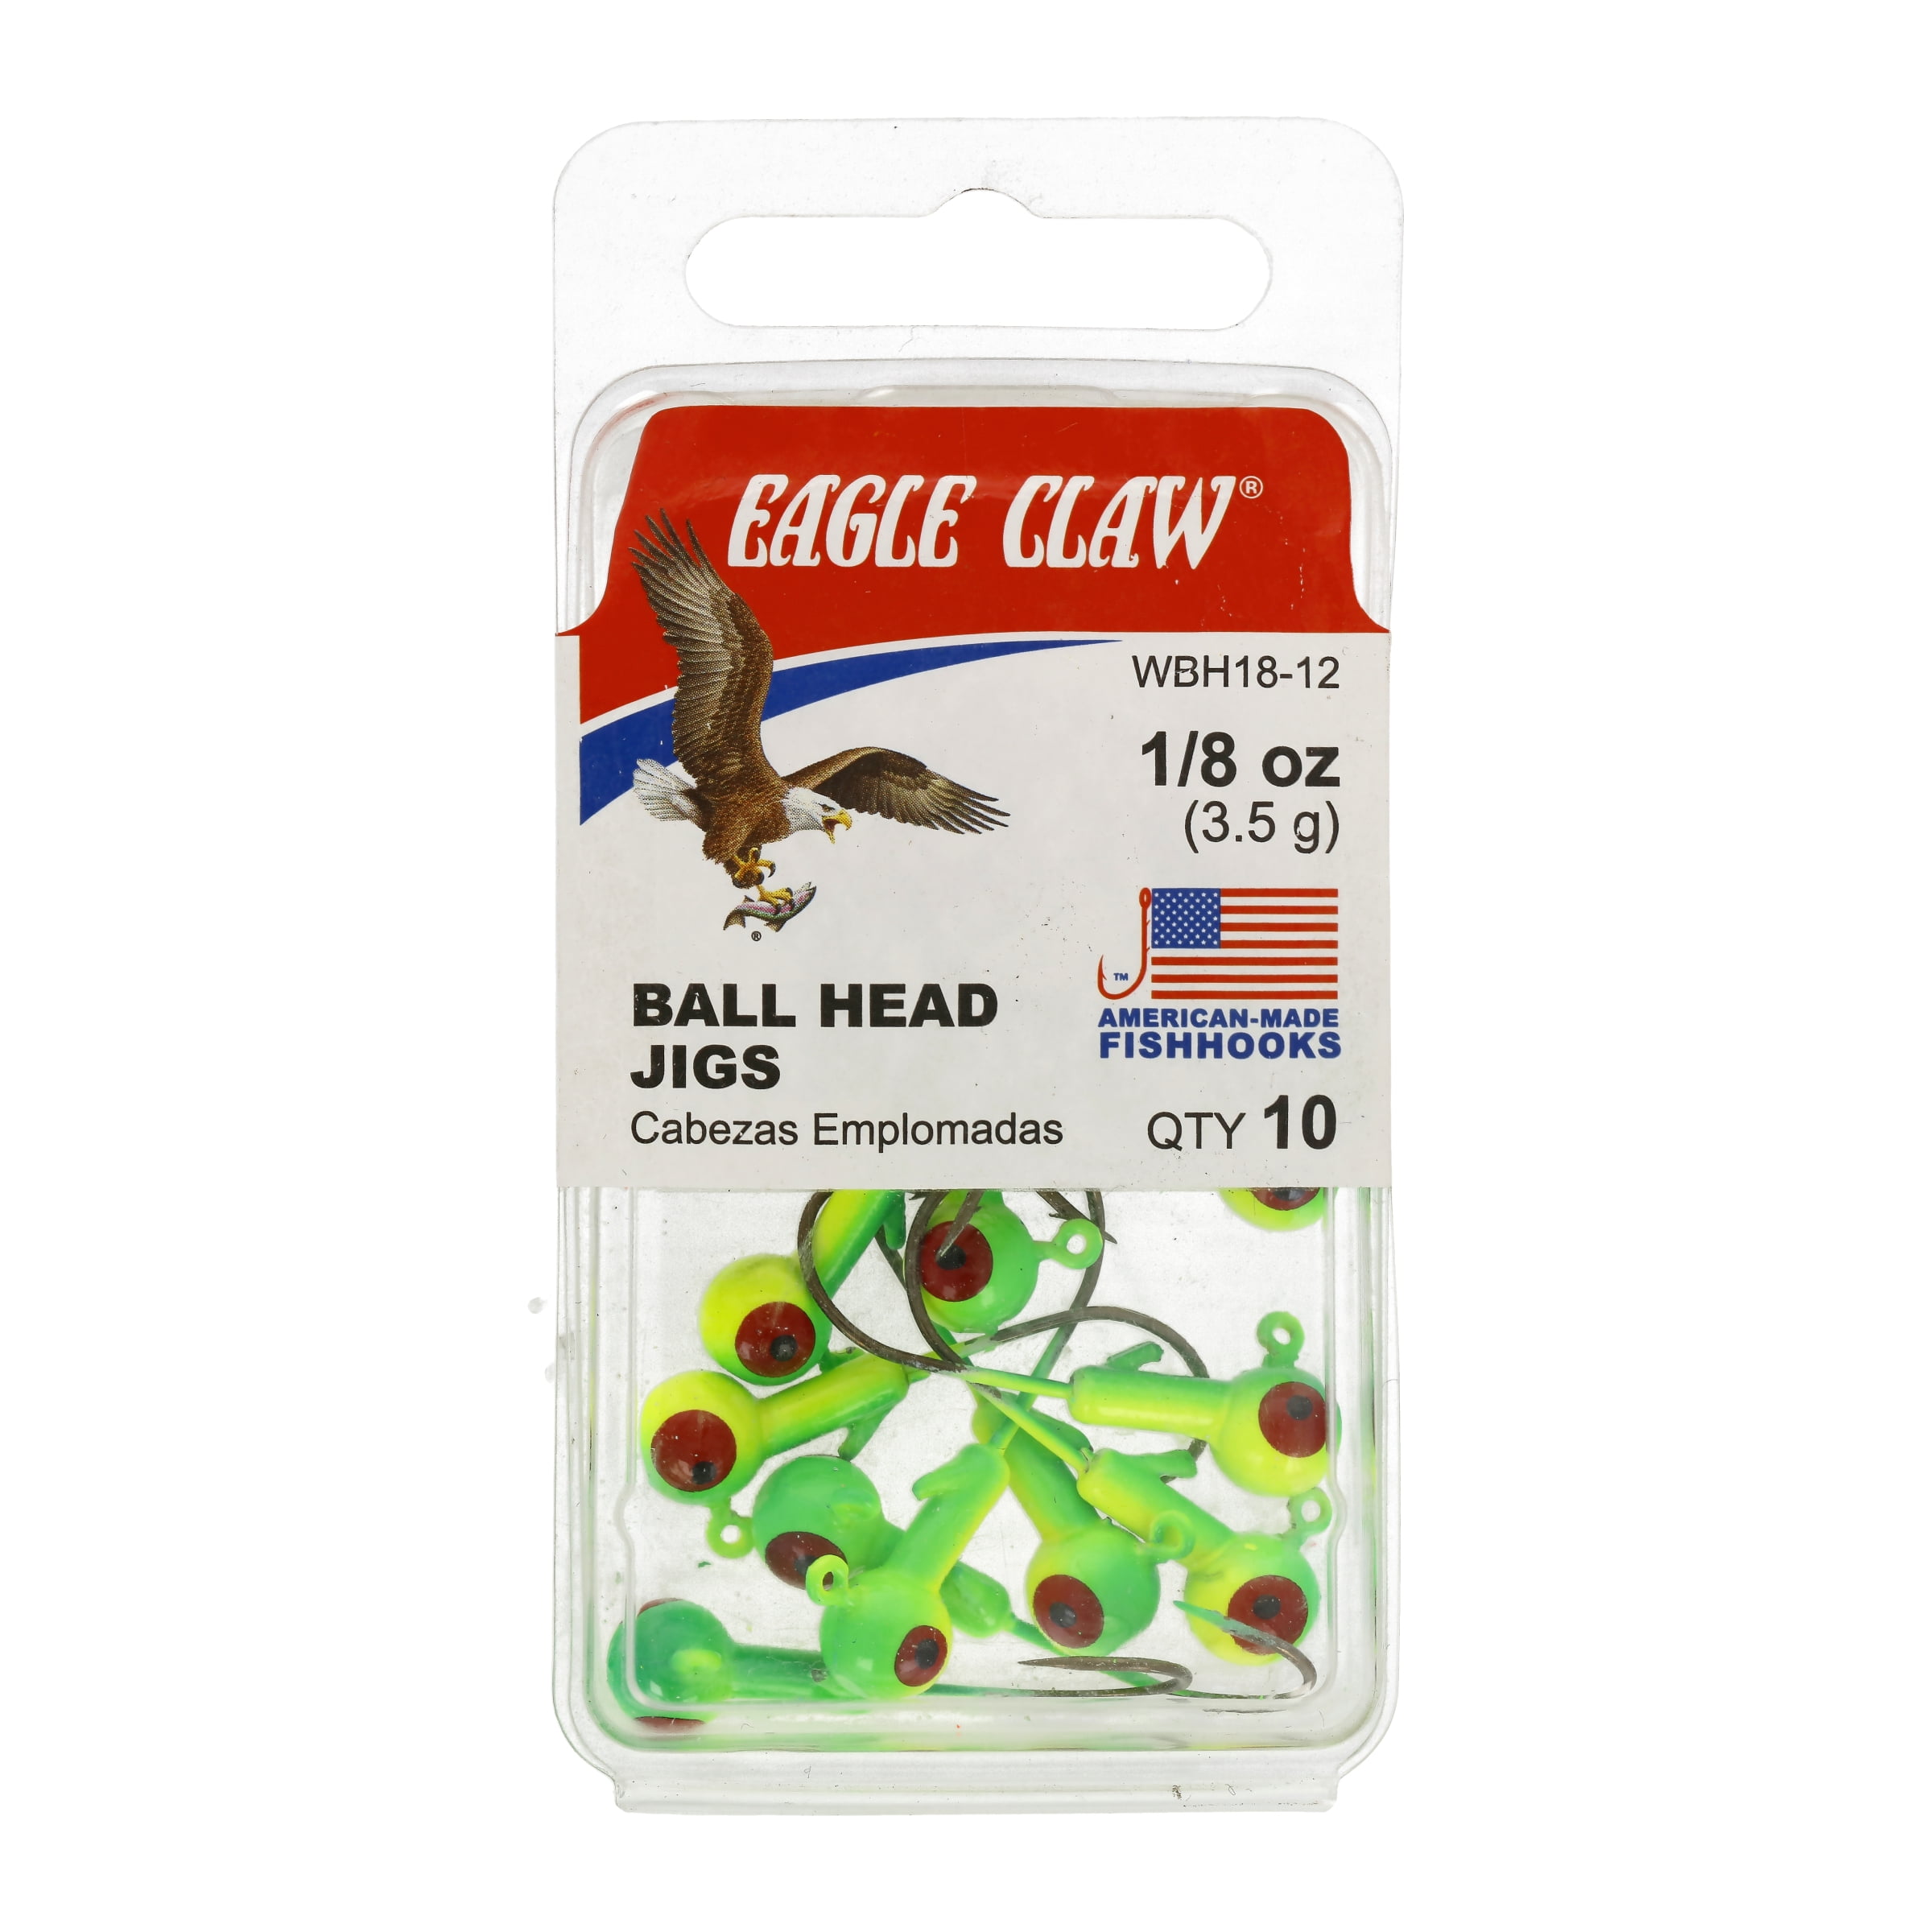 Eagle Claw Ball Head Fishing Jig 1/16 oz., Red Hook 